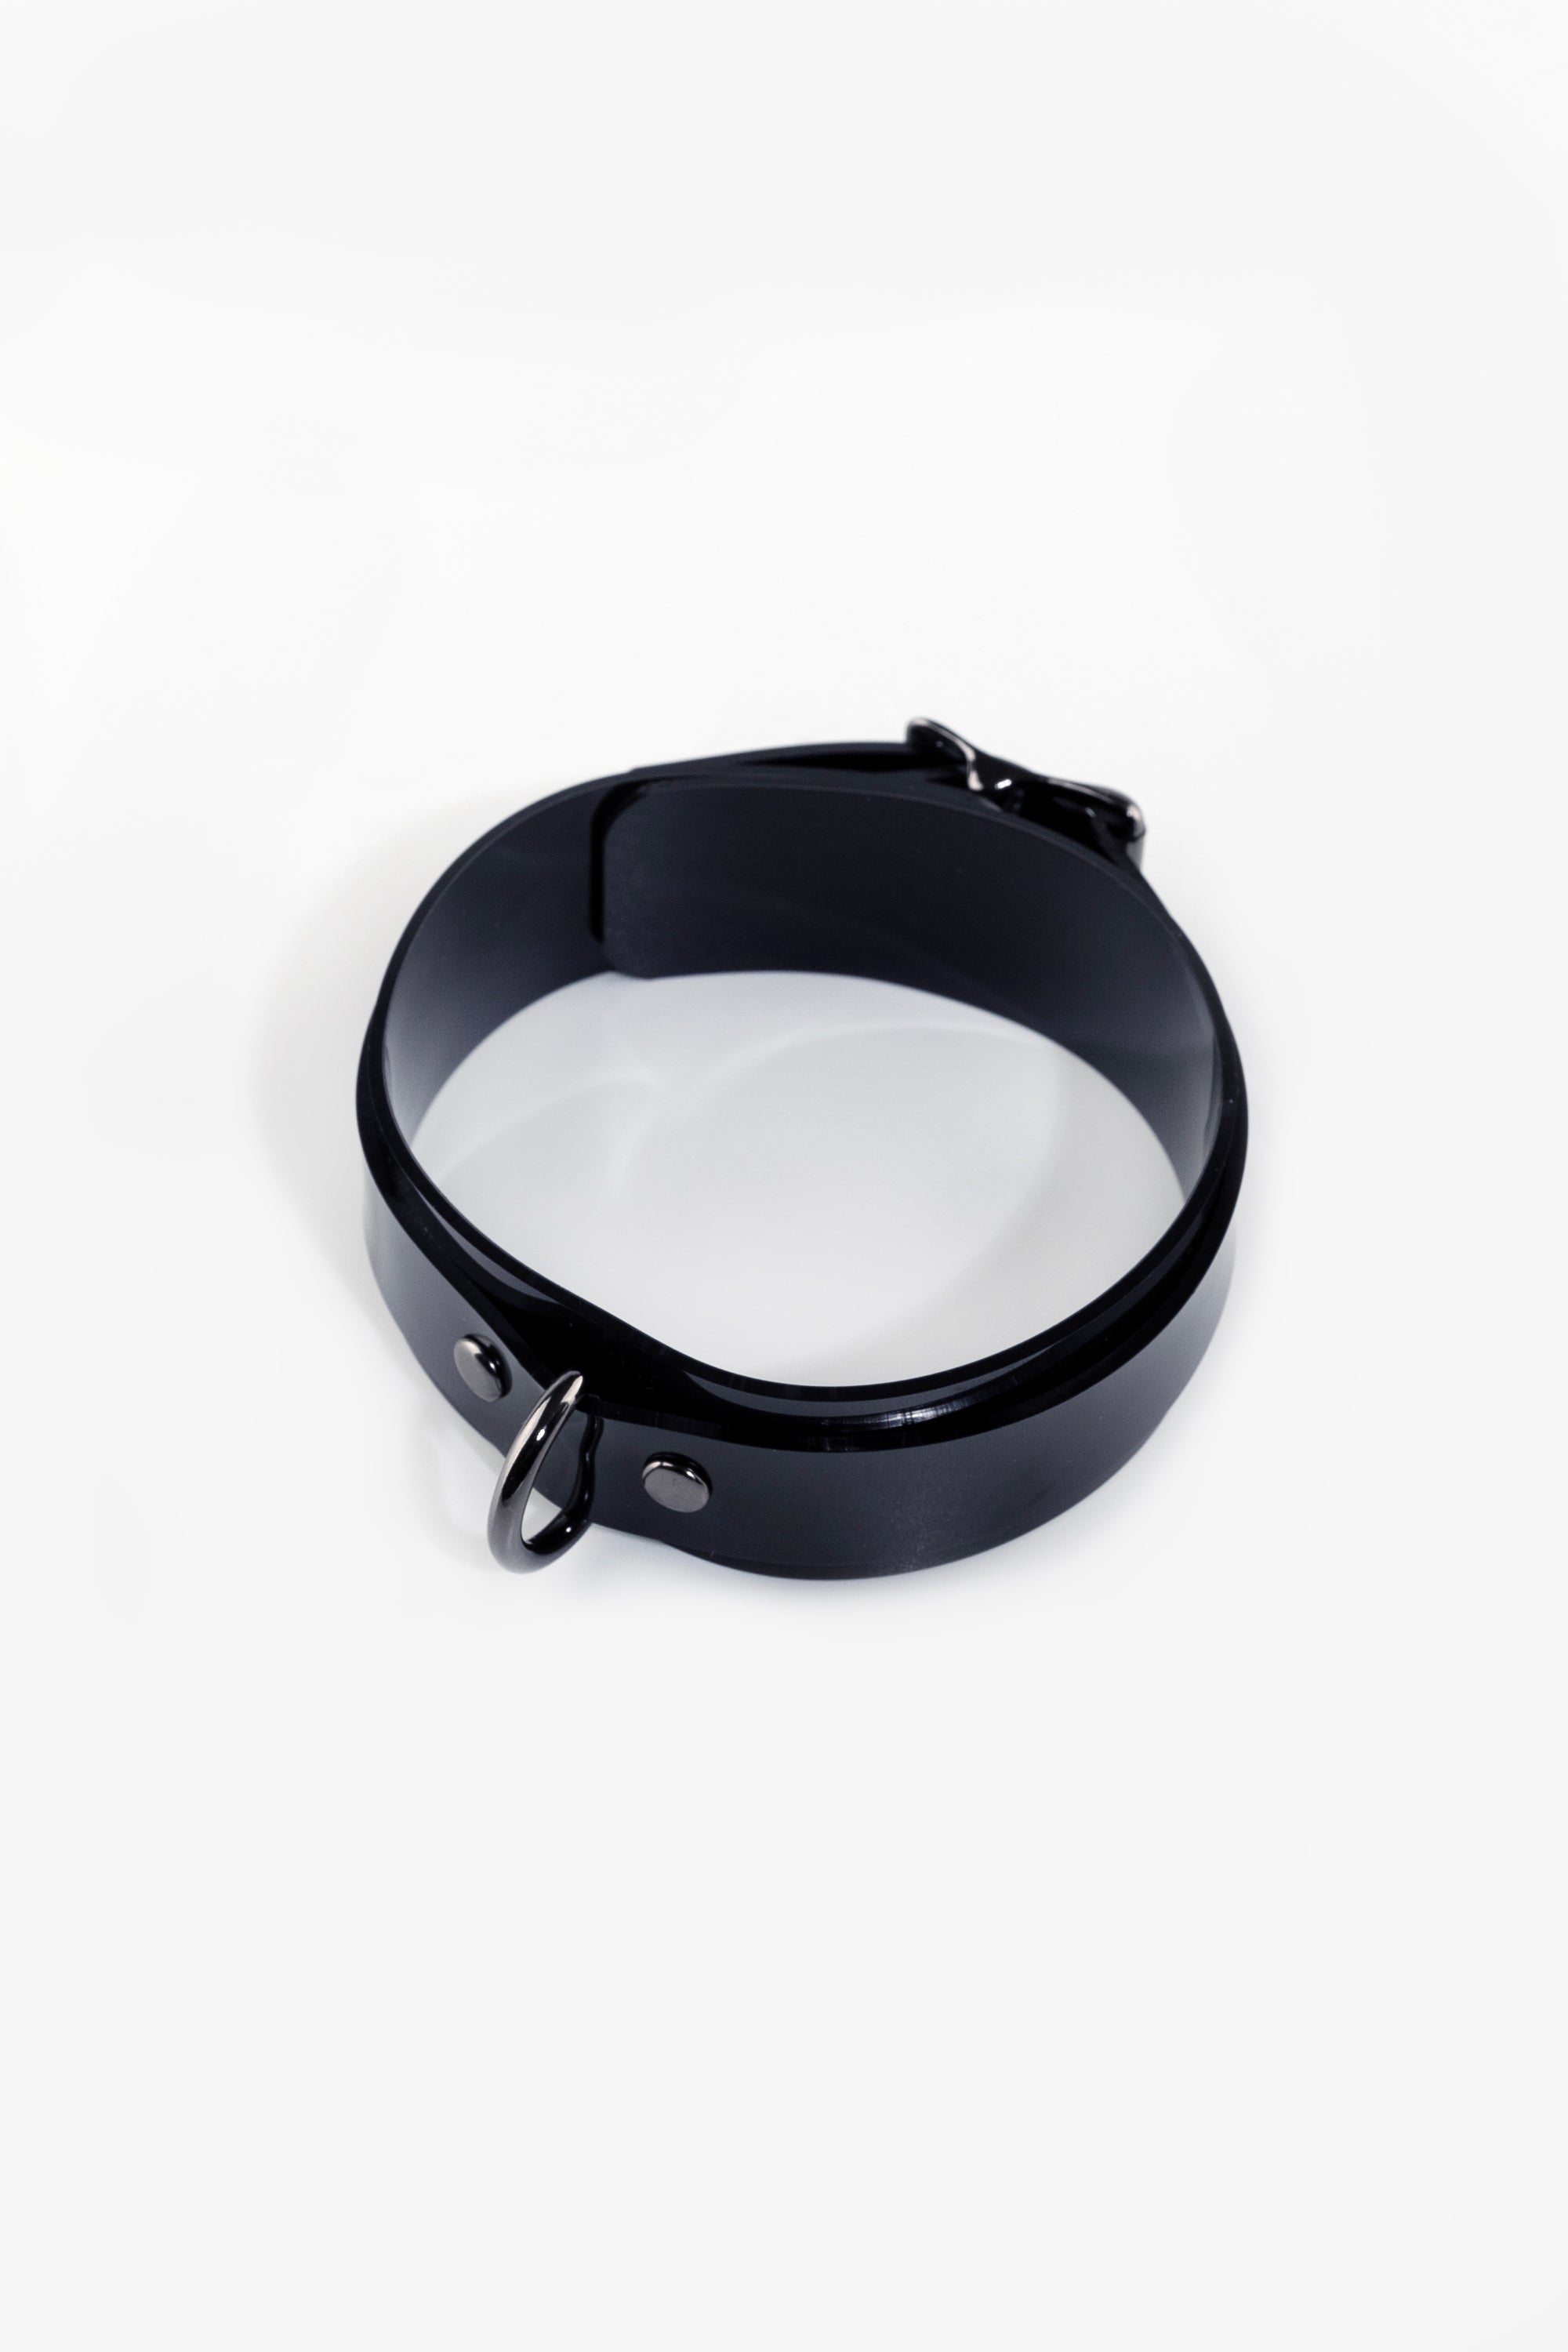 Lockable choker with D-ring, black/black